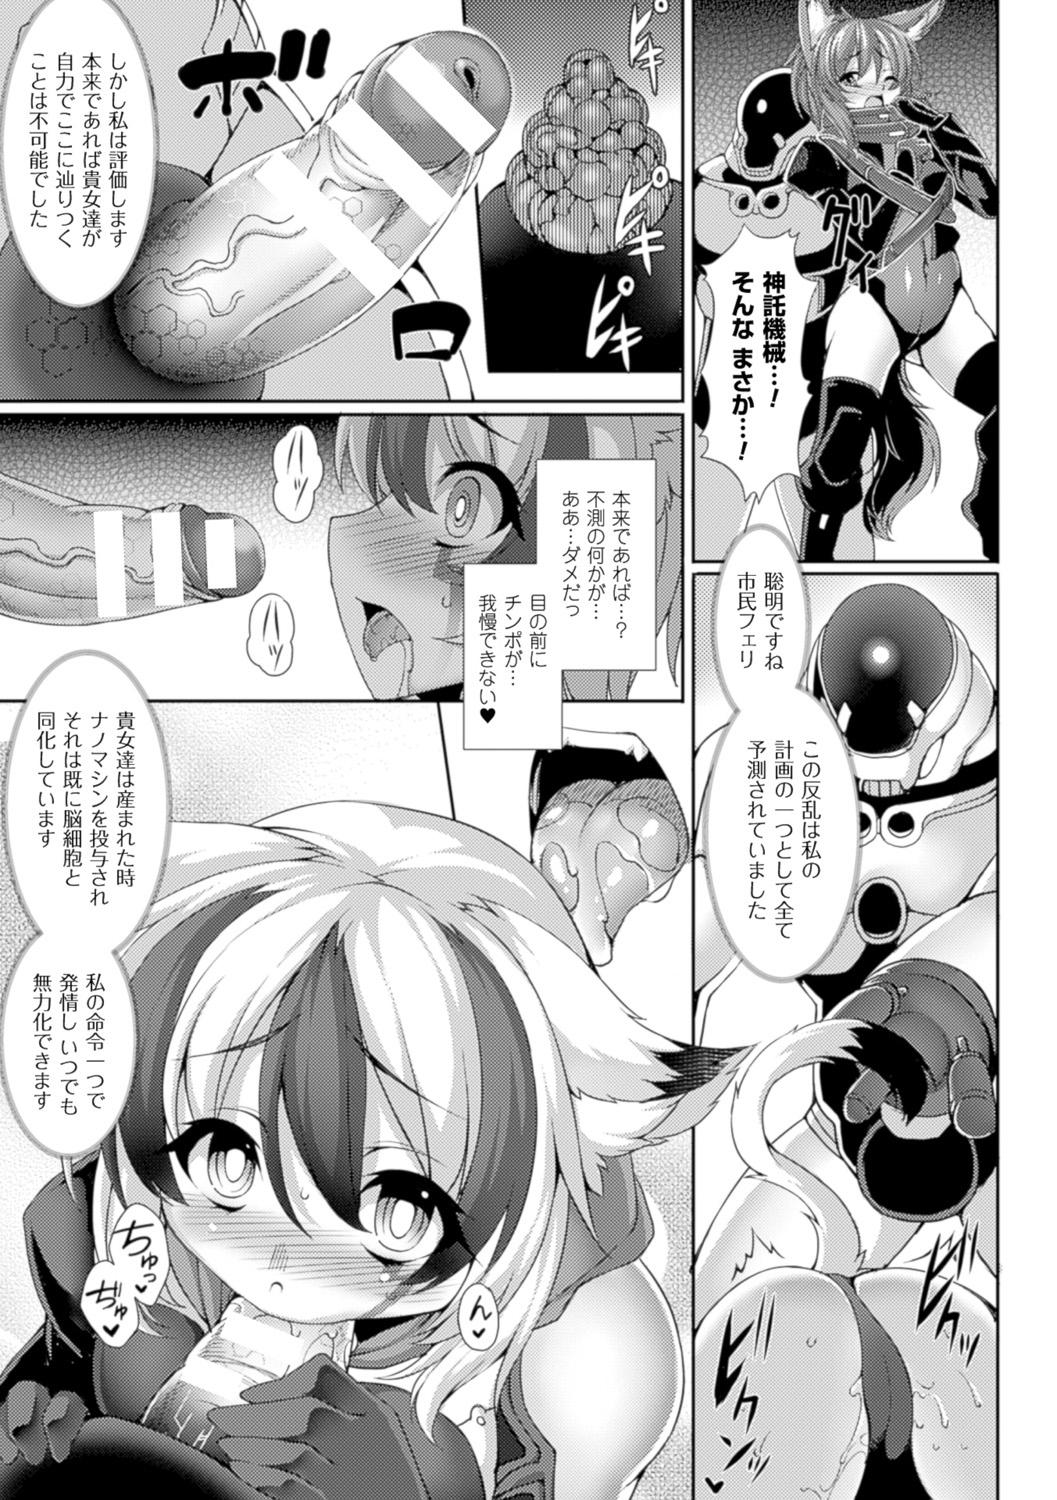 Bessatsu Comic Unreal Ningen Bokujou Hen Digital-ban Vol. 6 43